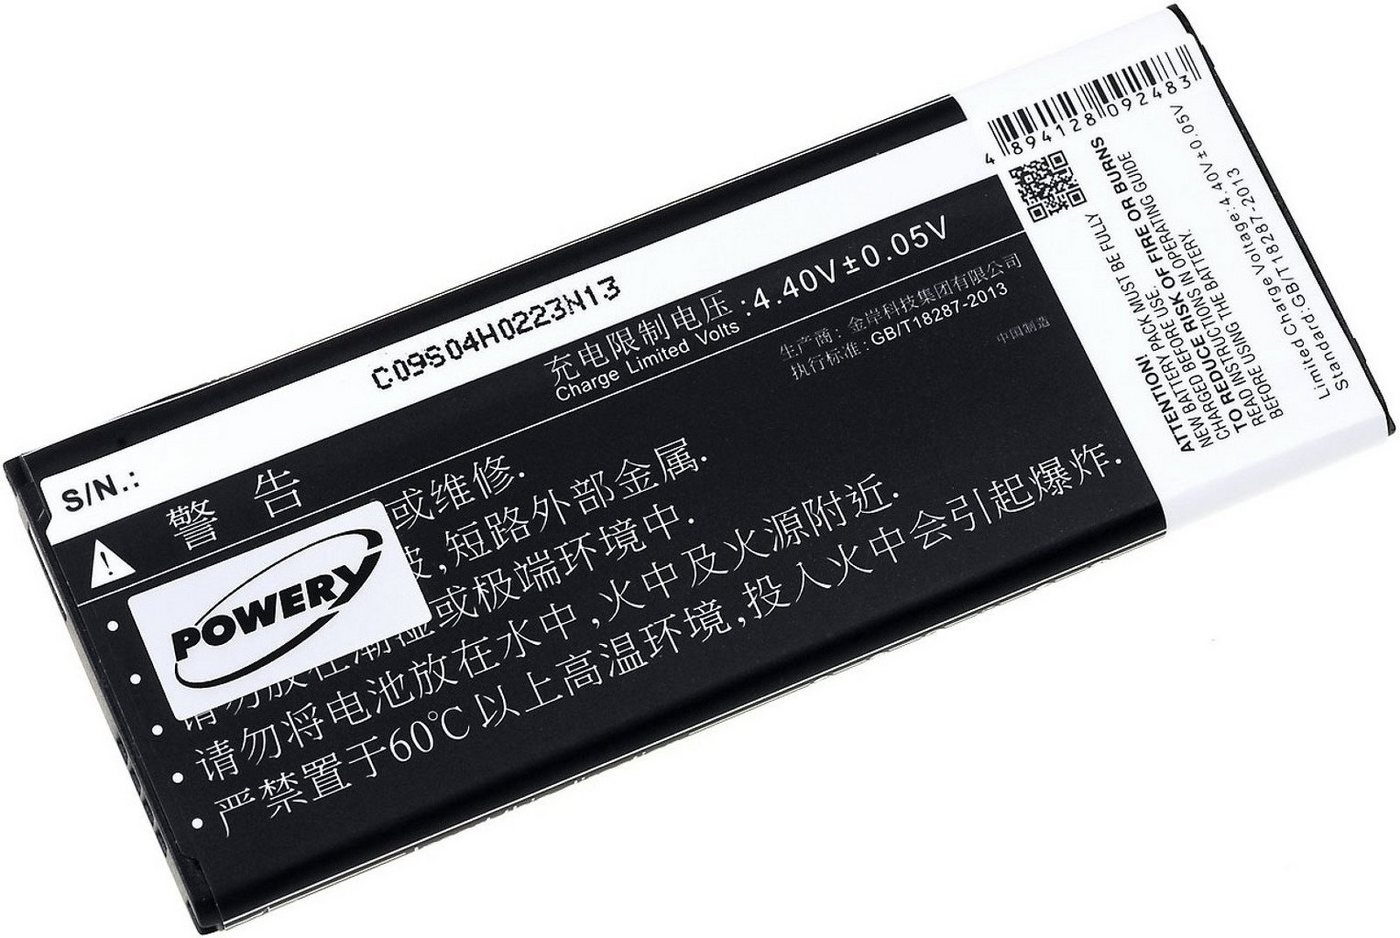 Powery Standardakku für Samsung SM-N9100 mit NFC-Chip Smartphone-Akku 3000 mAh (3.85 V) schwarz